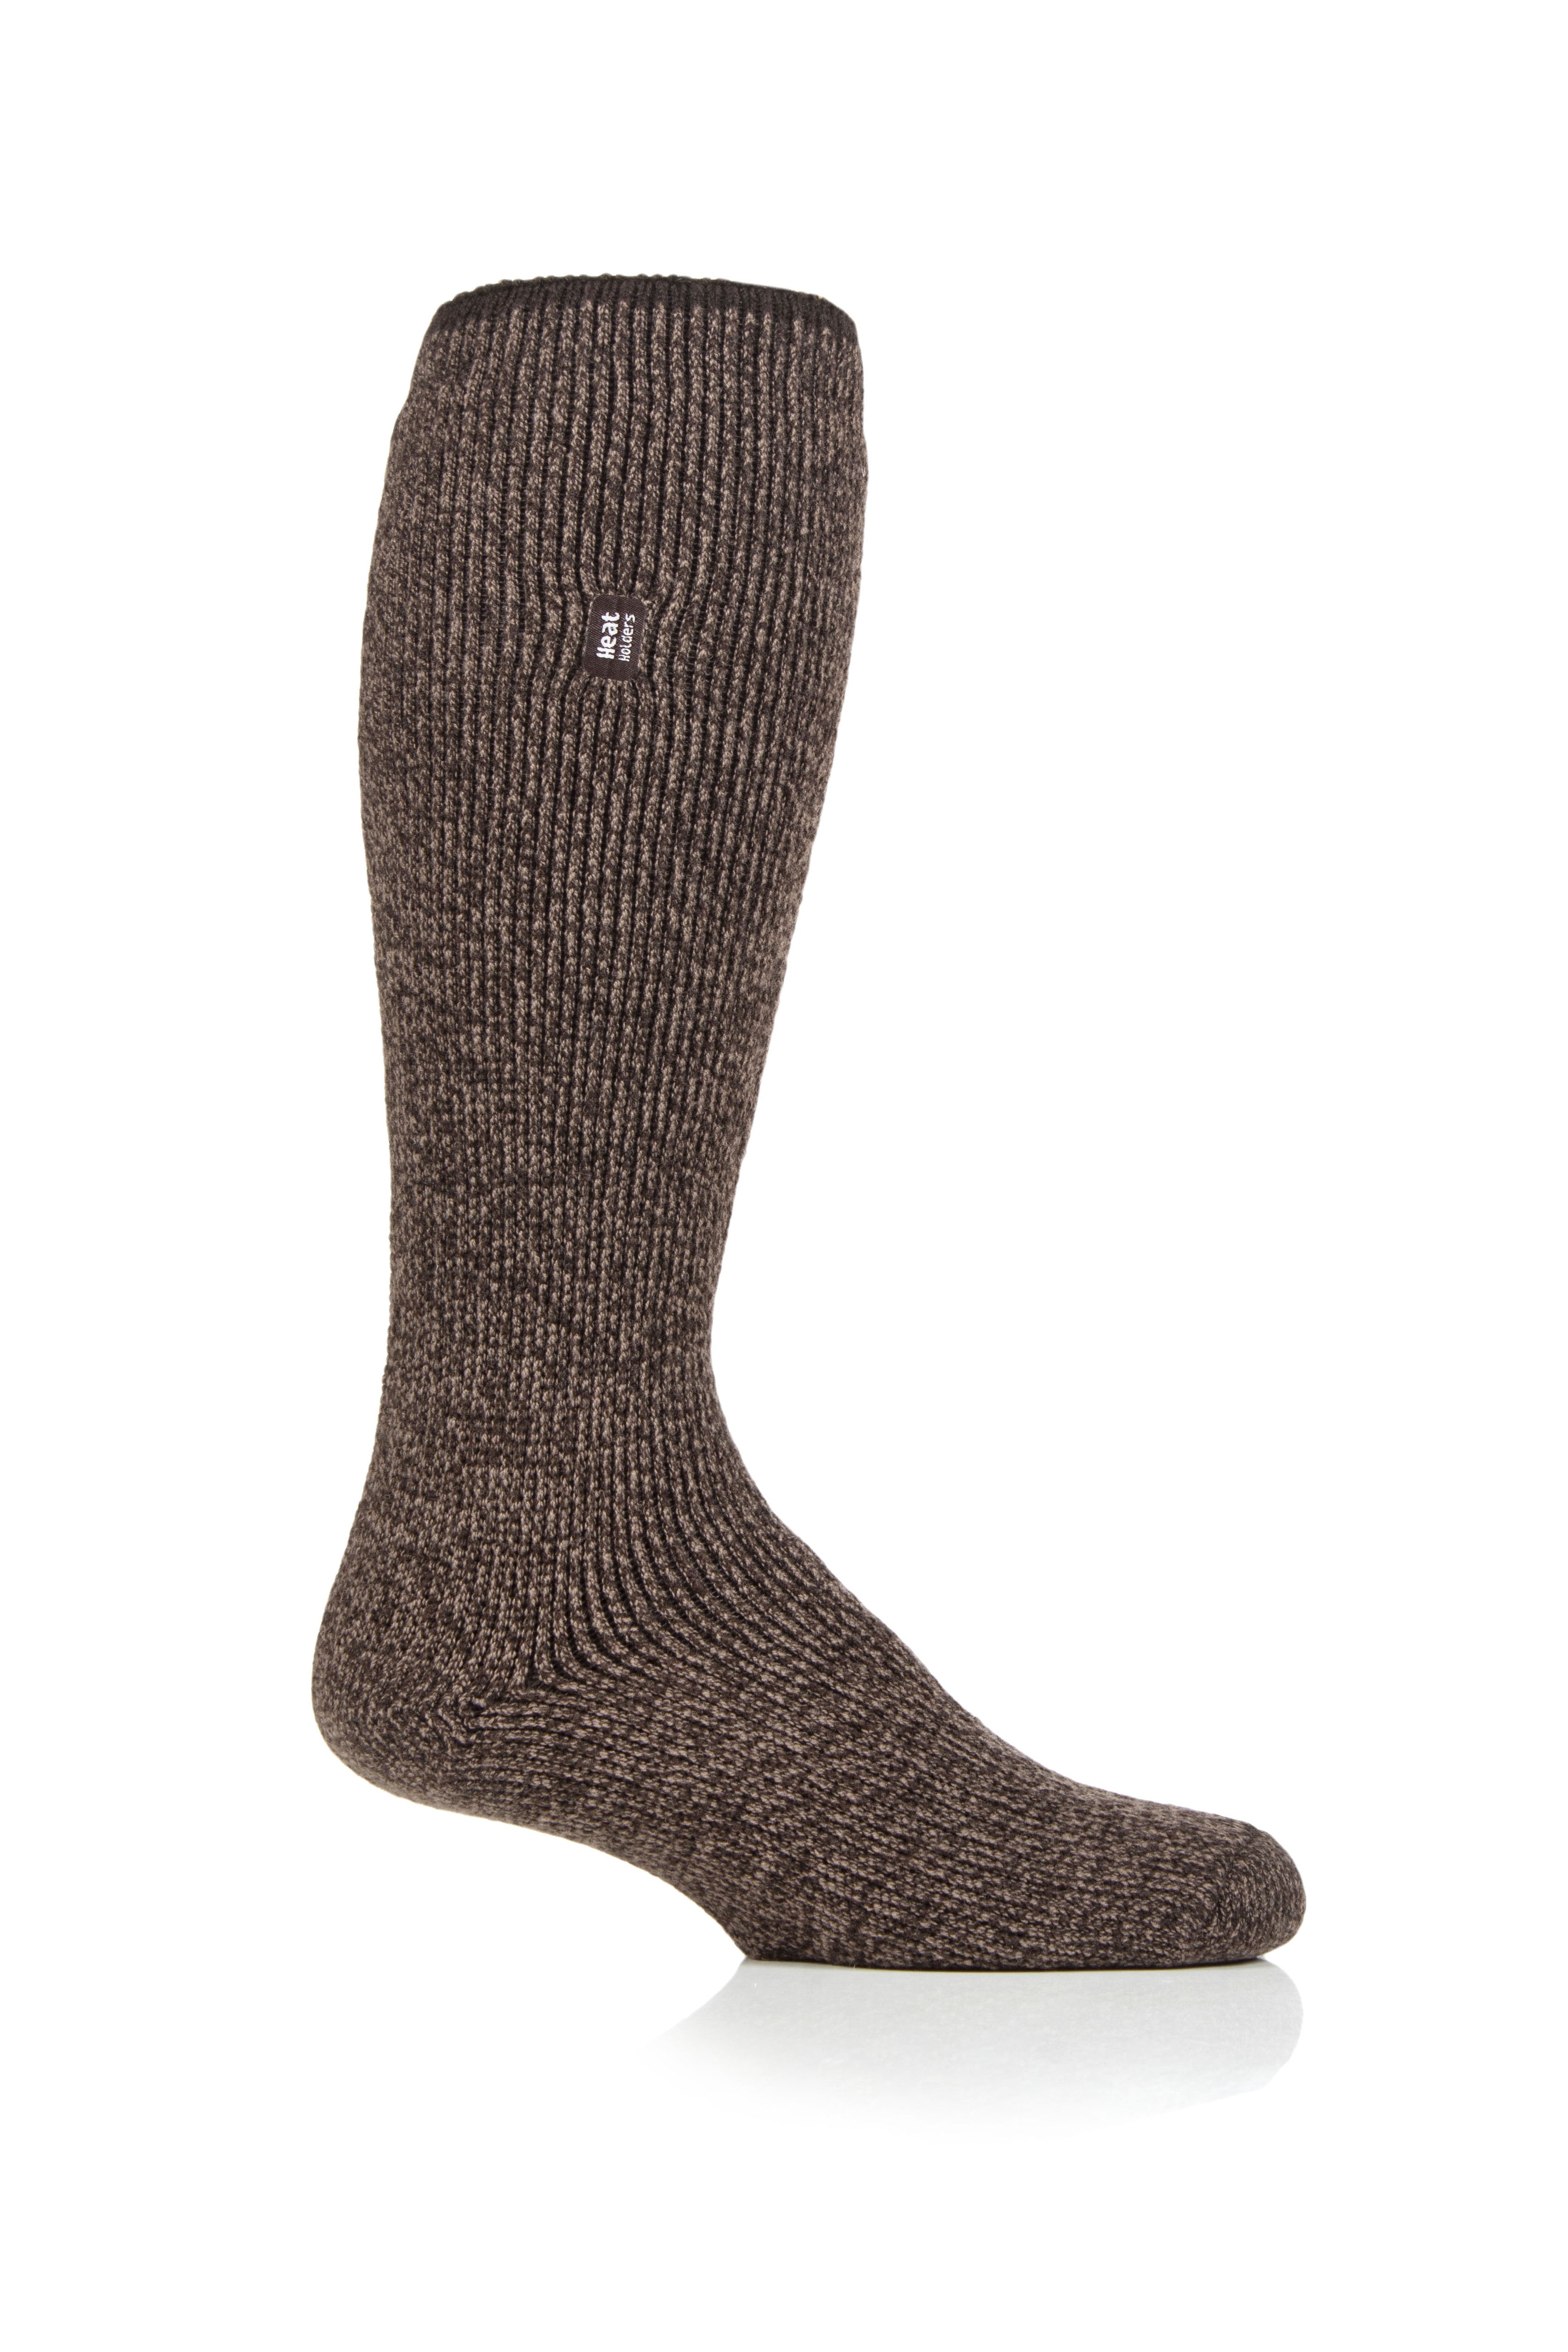 HEAT HOLDERS Merino Wool Long Thermal Sock - Men's